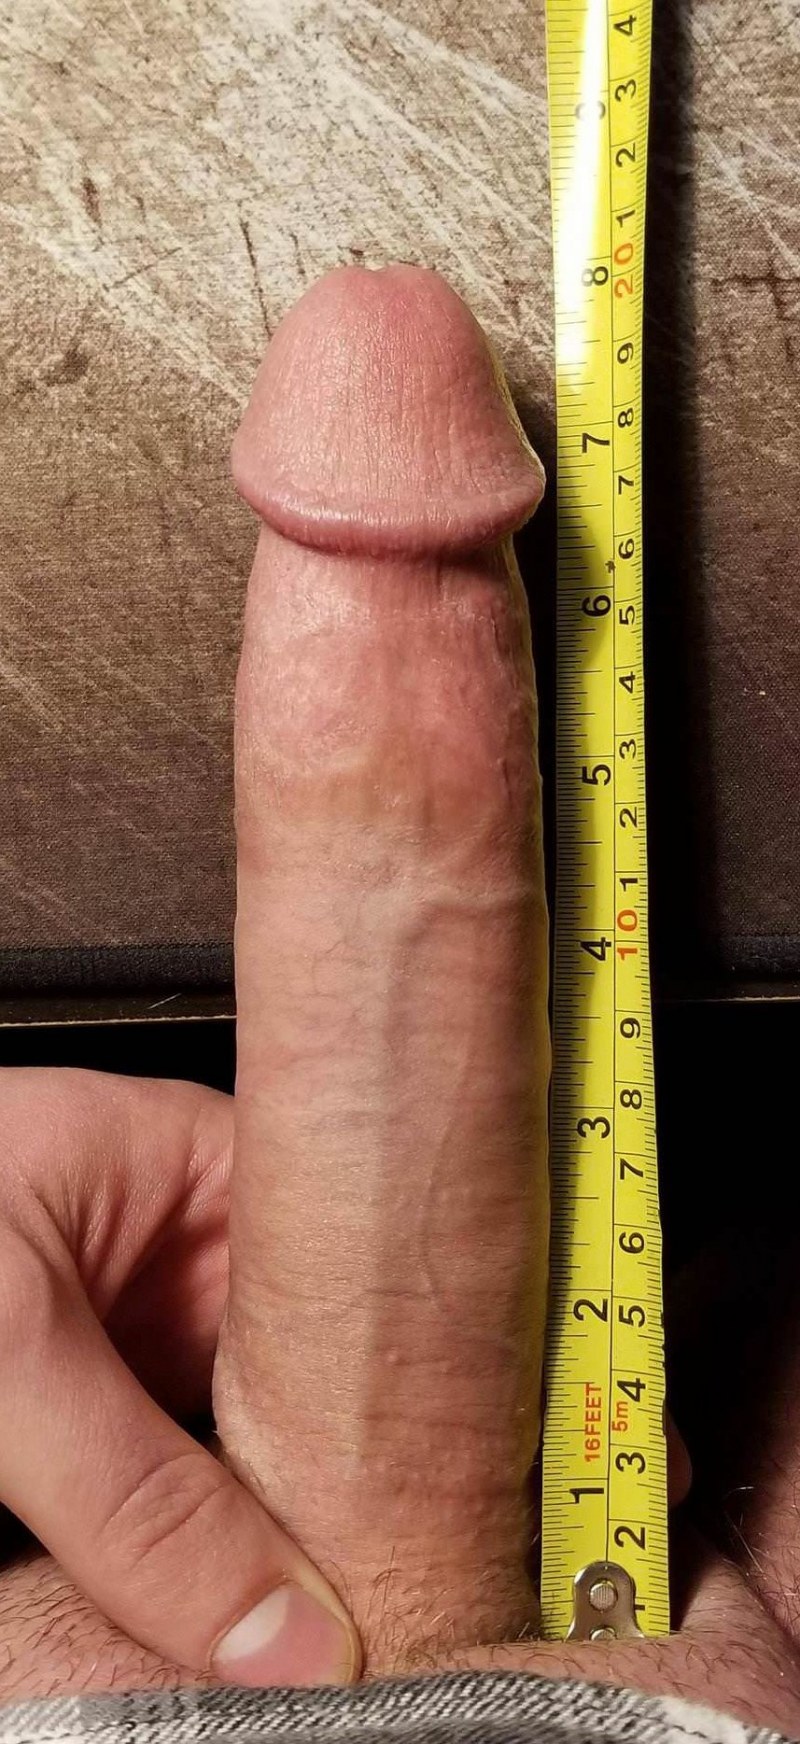 7 inch dick at 16